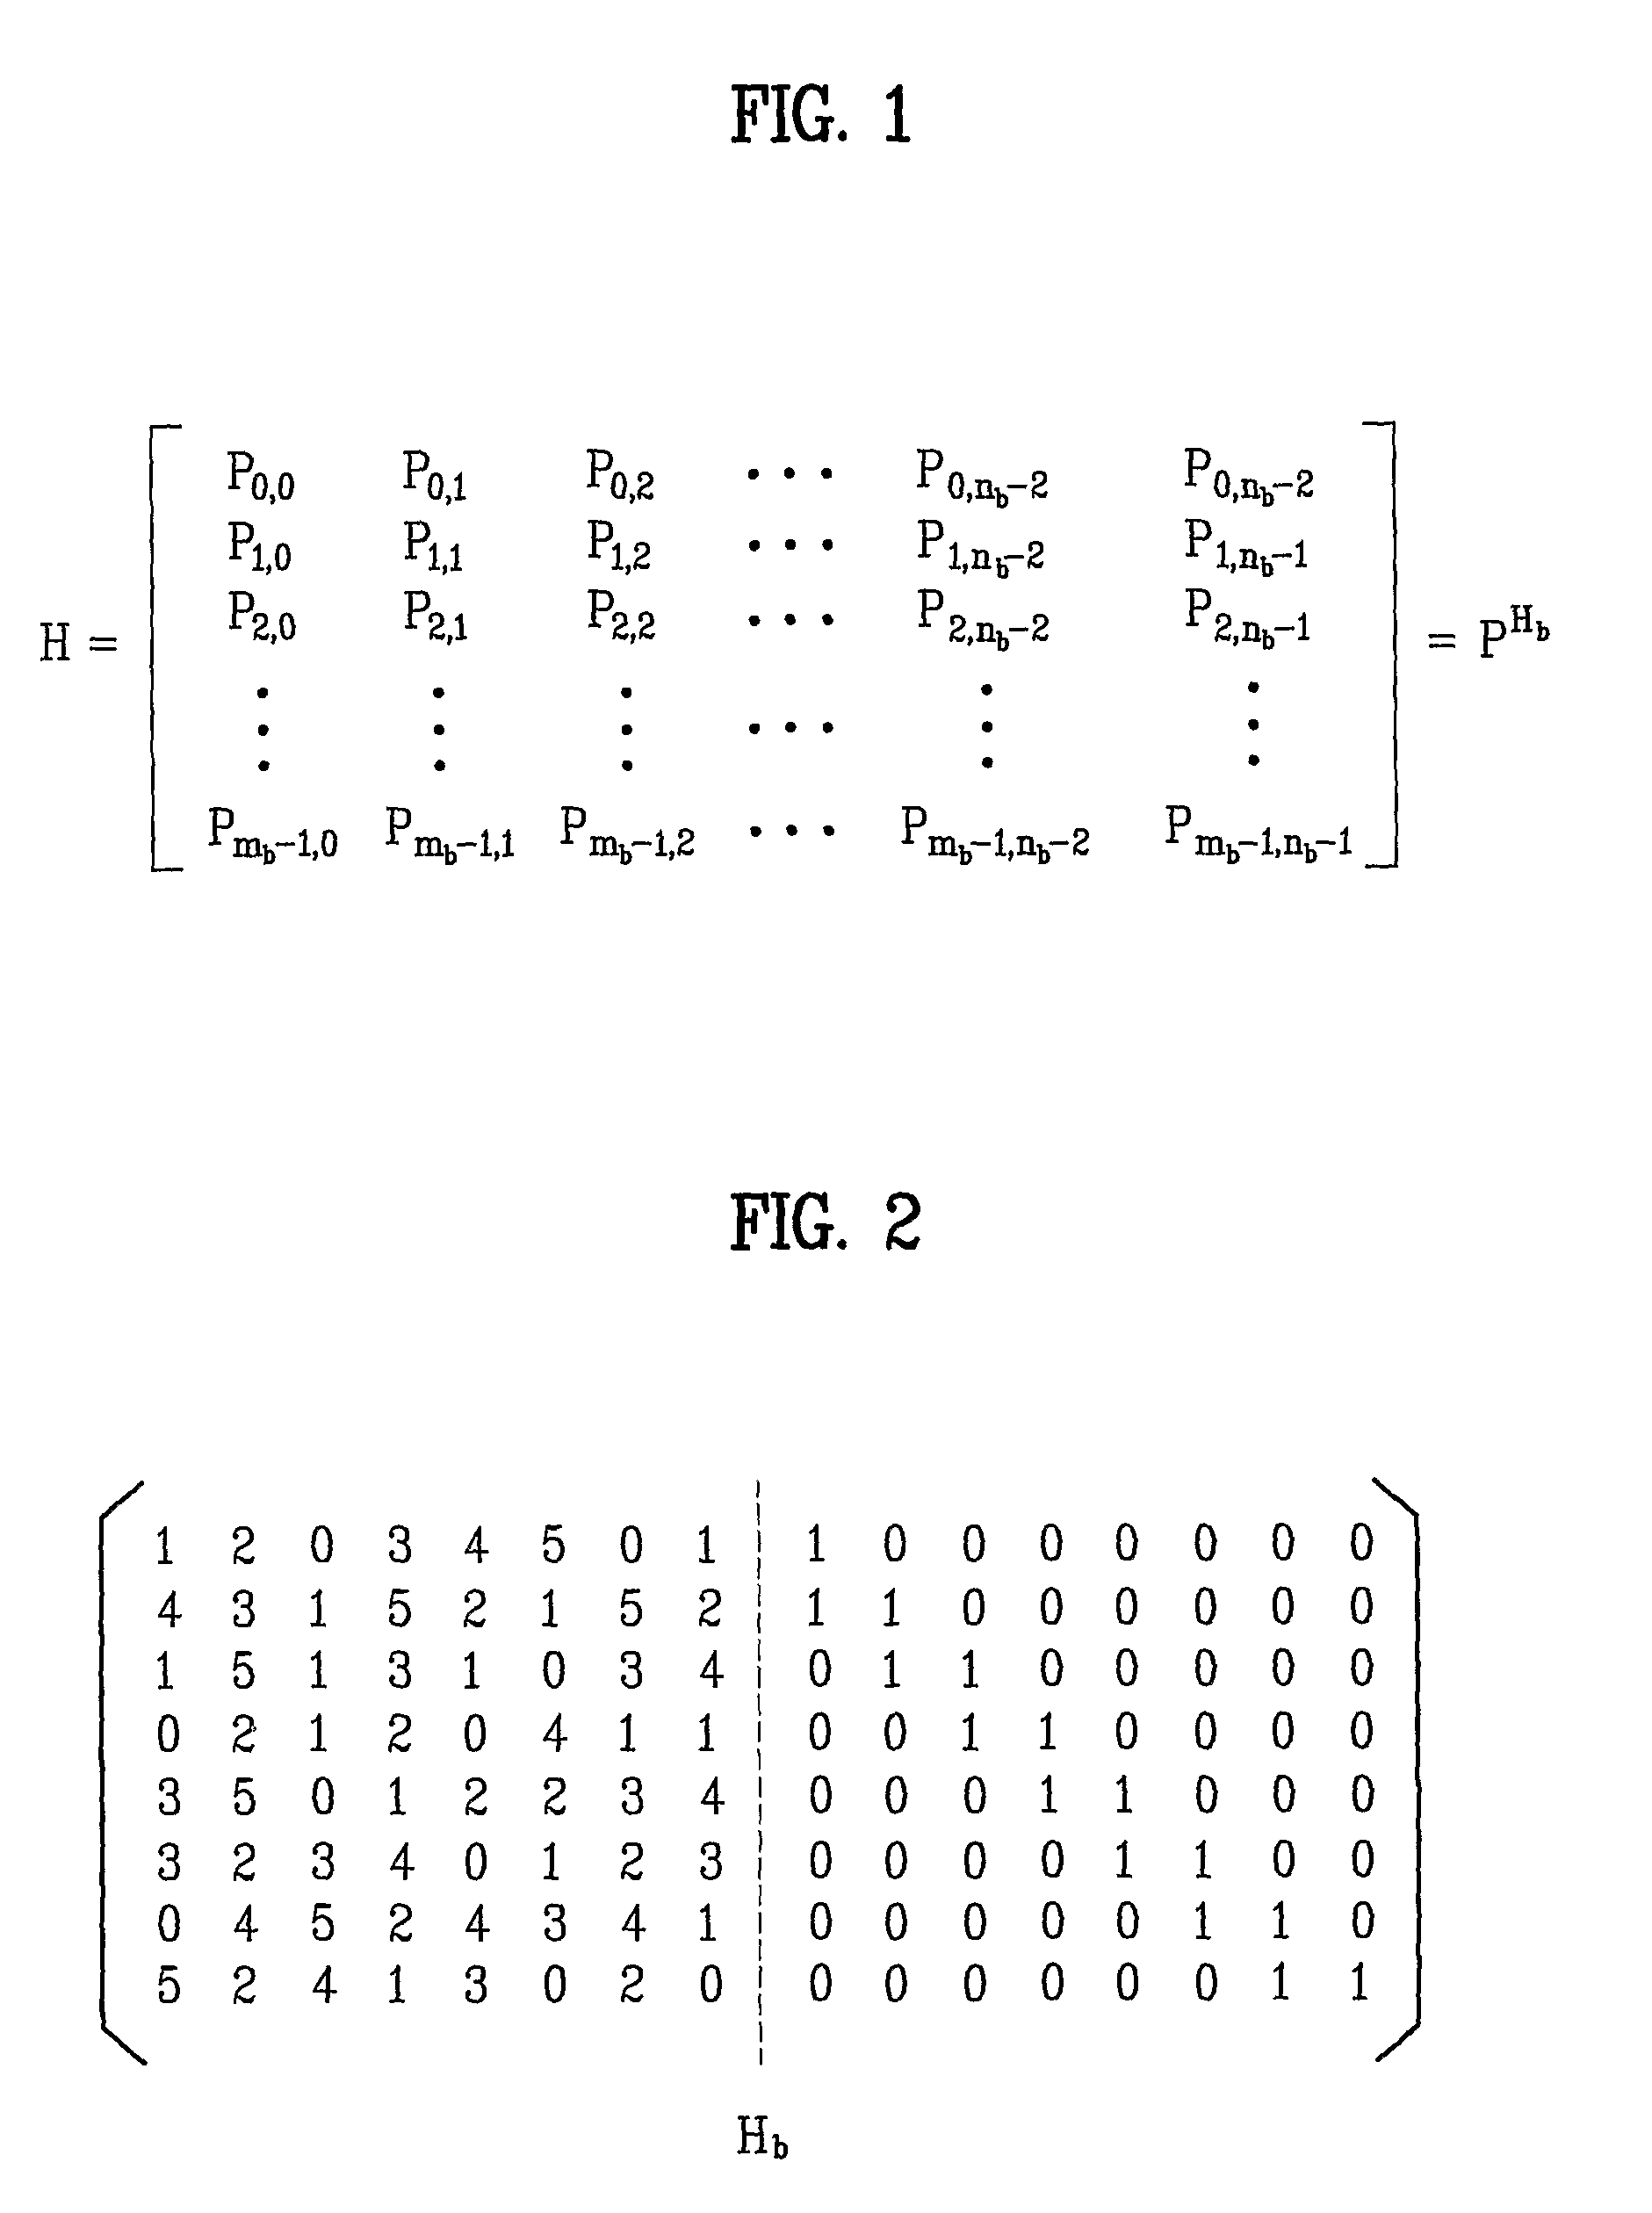 Method of encoding and decoding using LDPC code